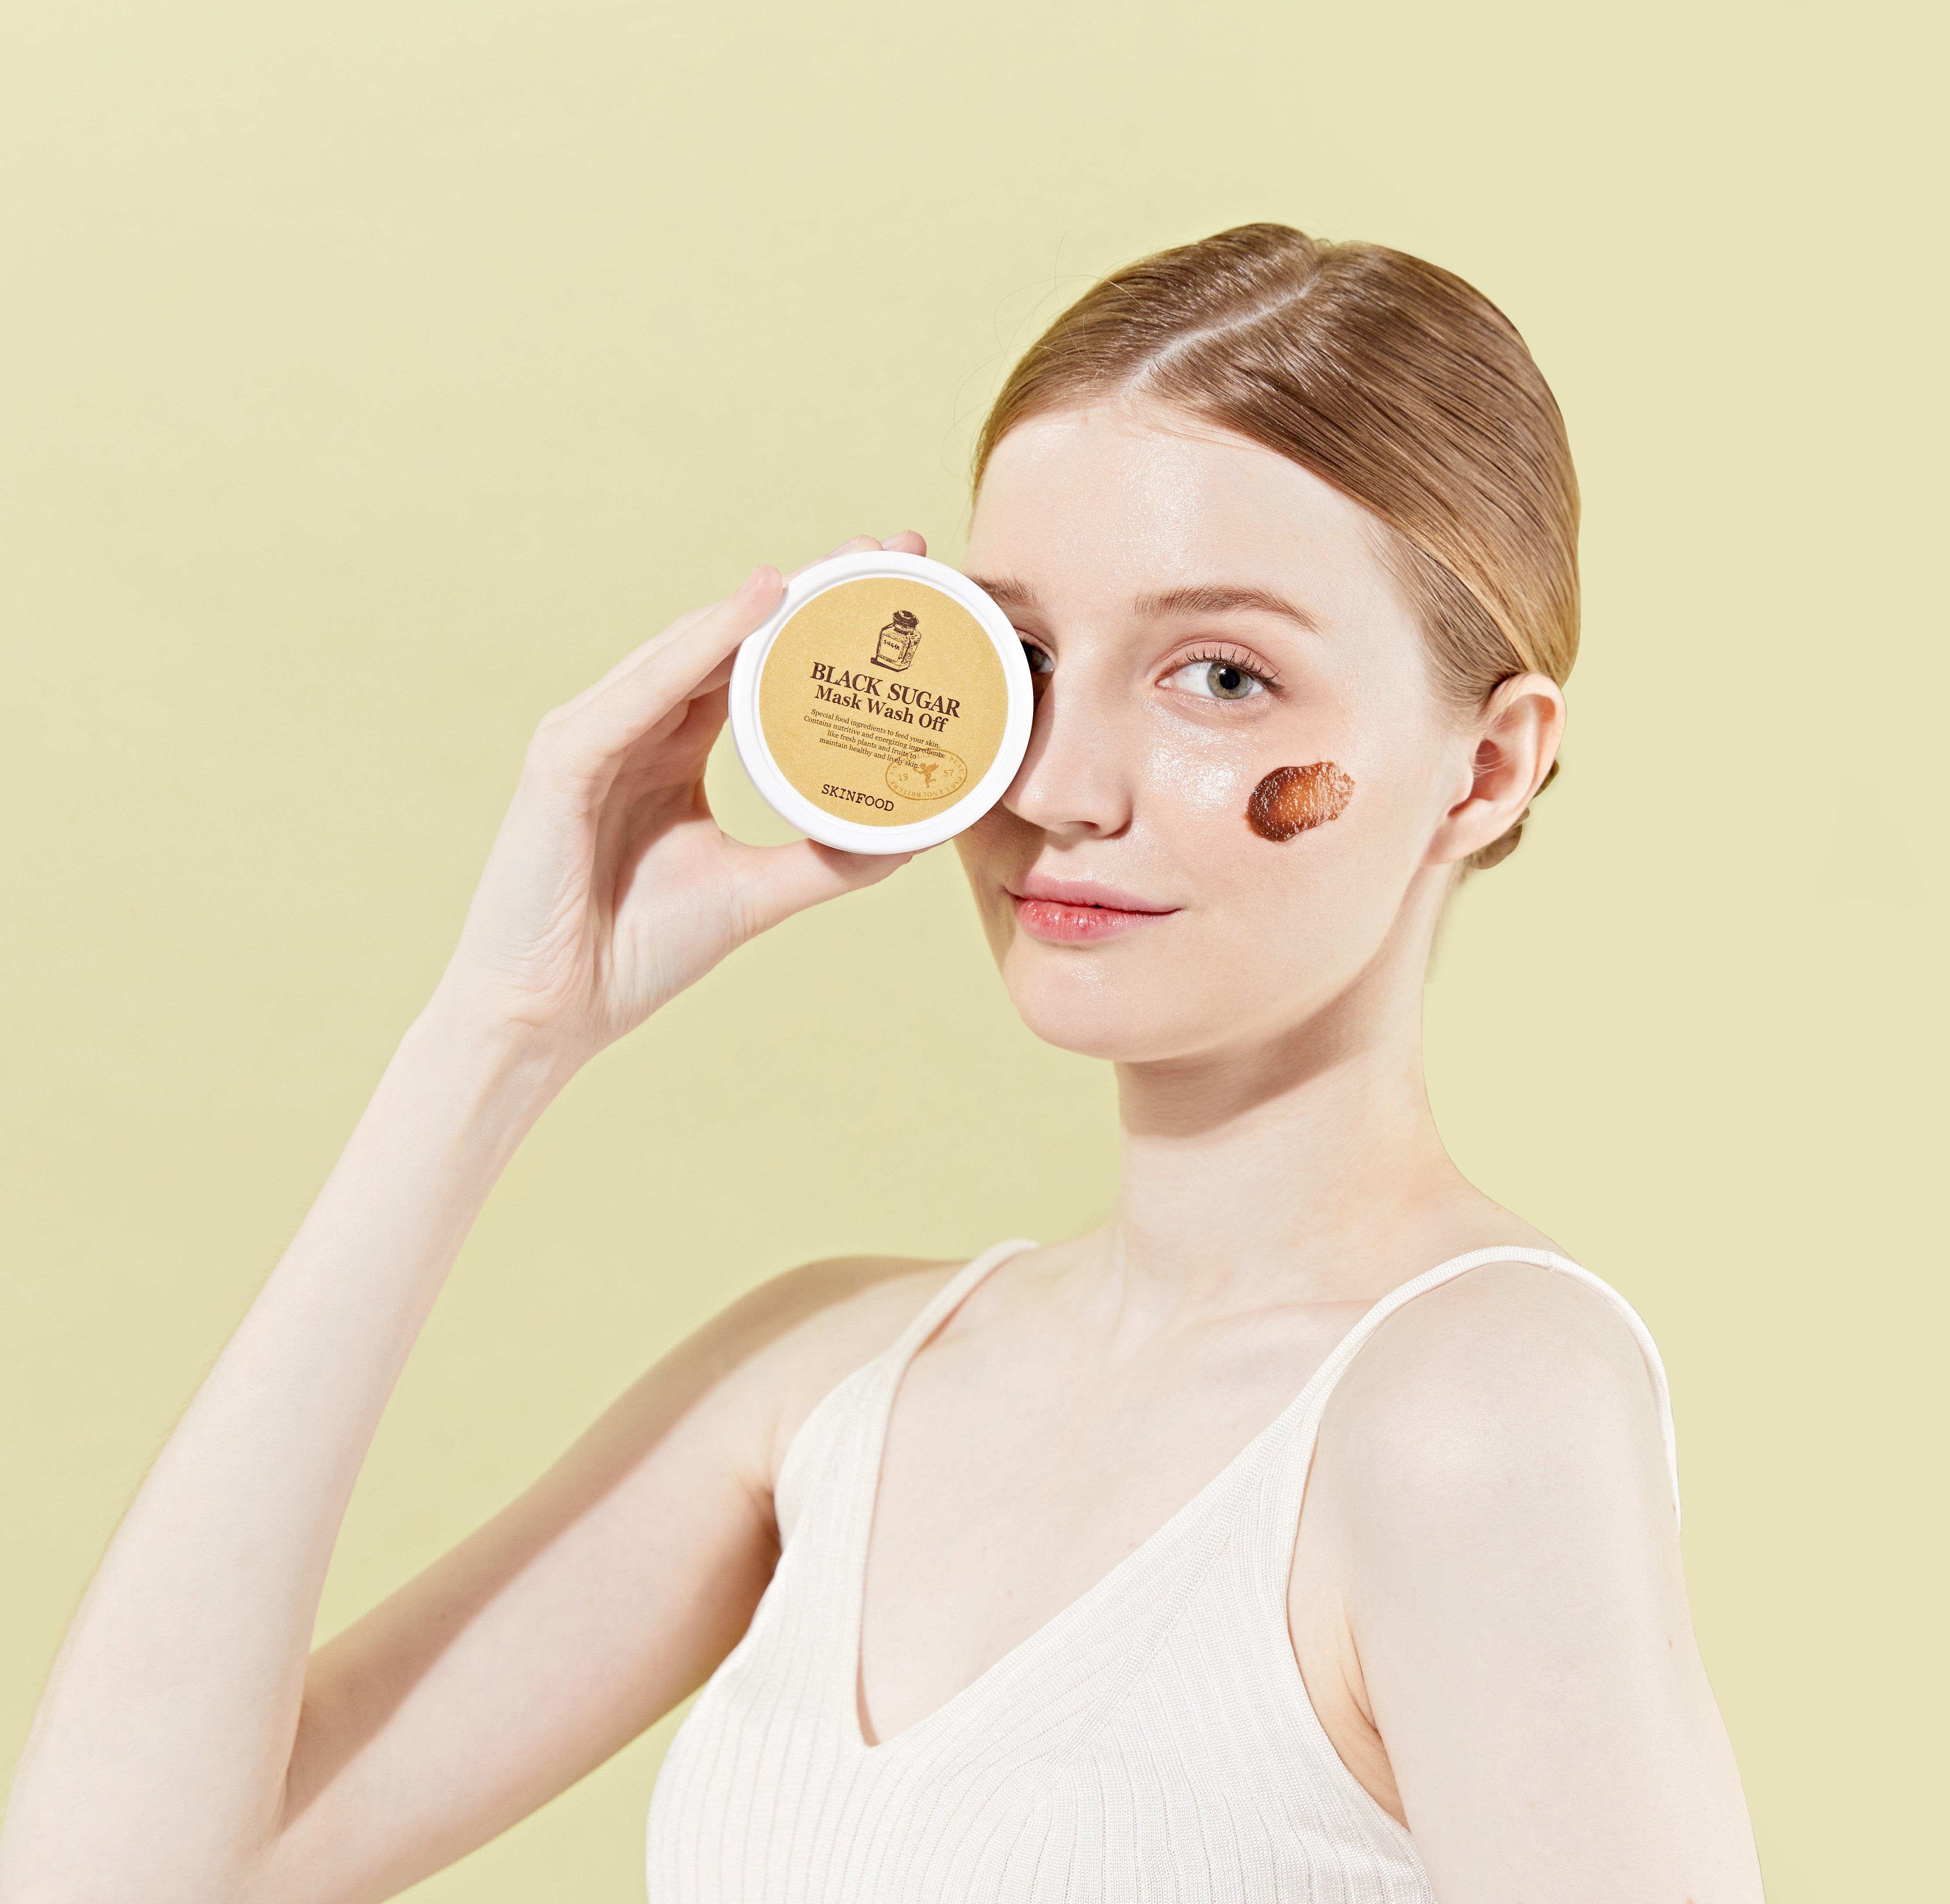 [Sun-kit Free Gift] Black Sugar Mask Wash Off + Royal Honey Propolis Mask